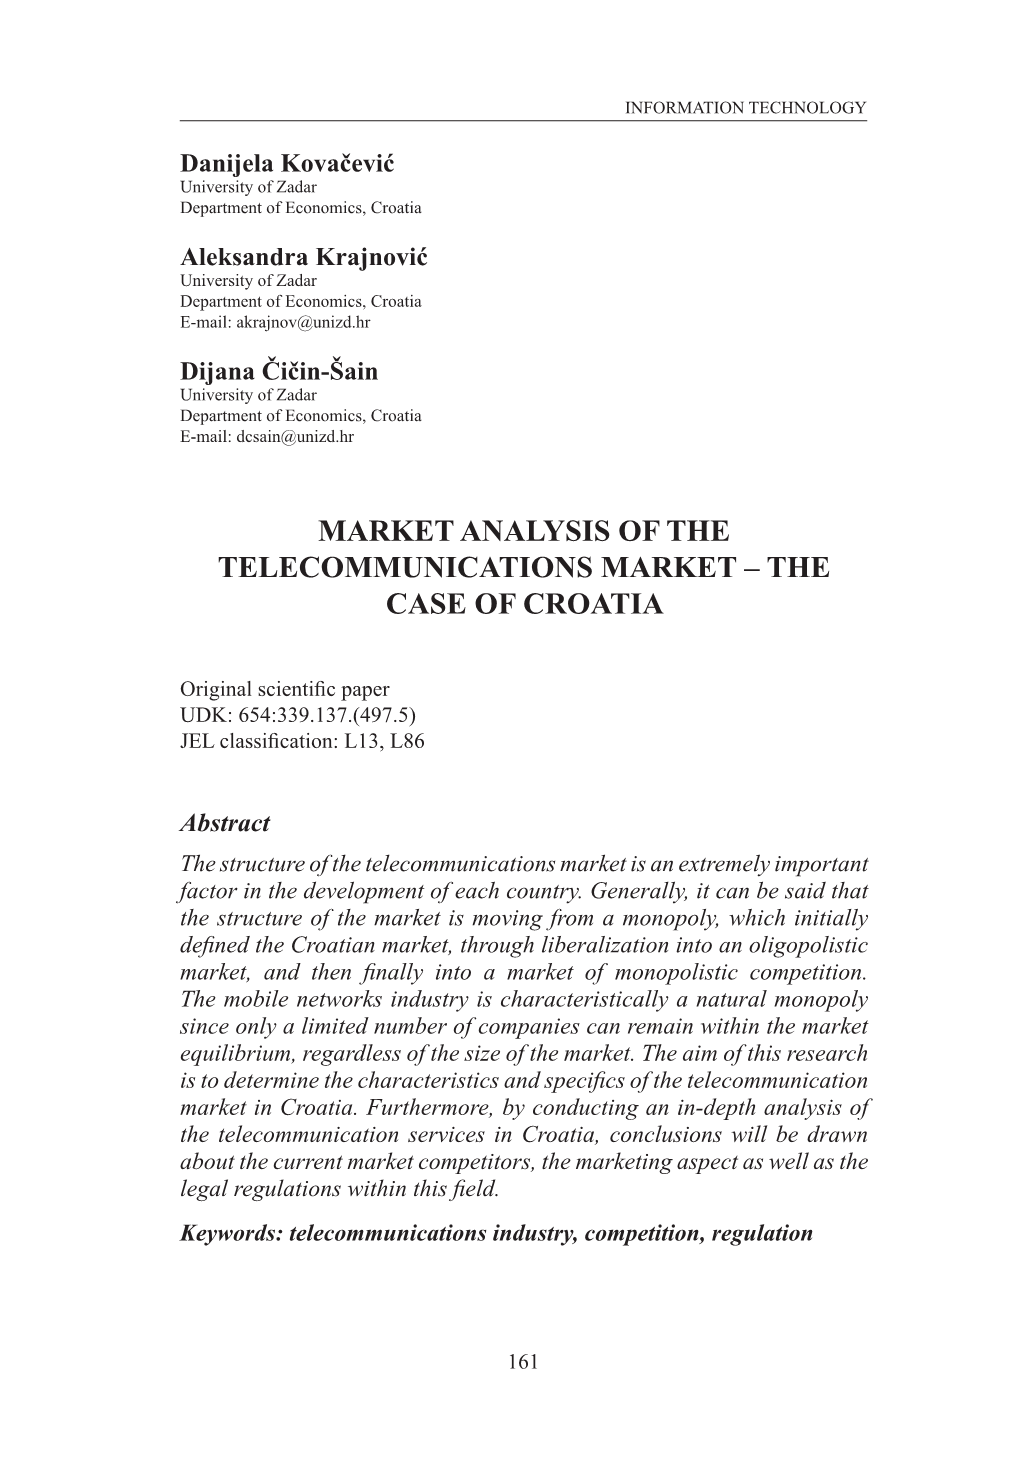 Market Analysis of the Telecommunications Market – the Case of Croatia